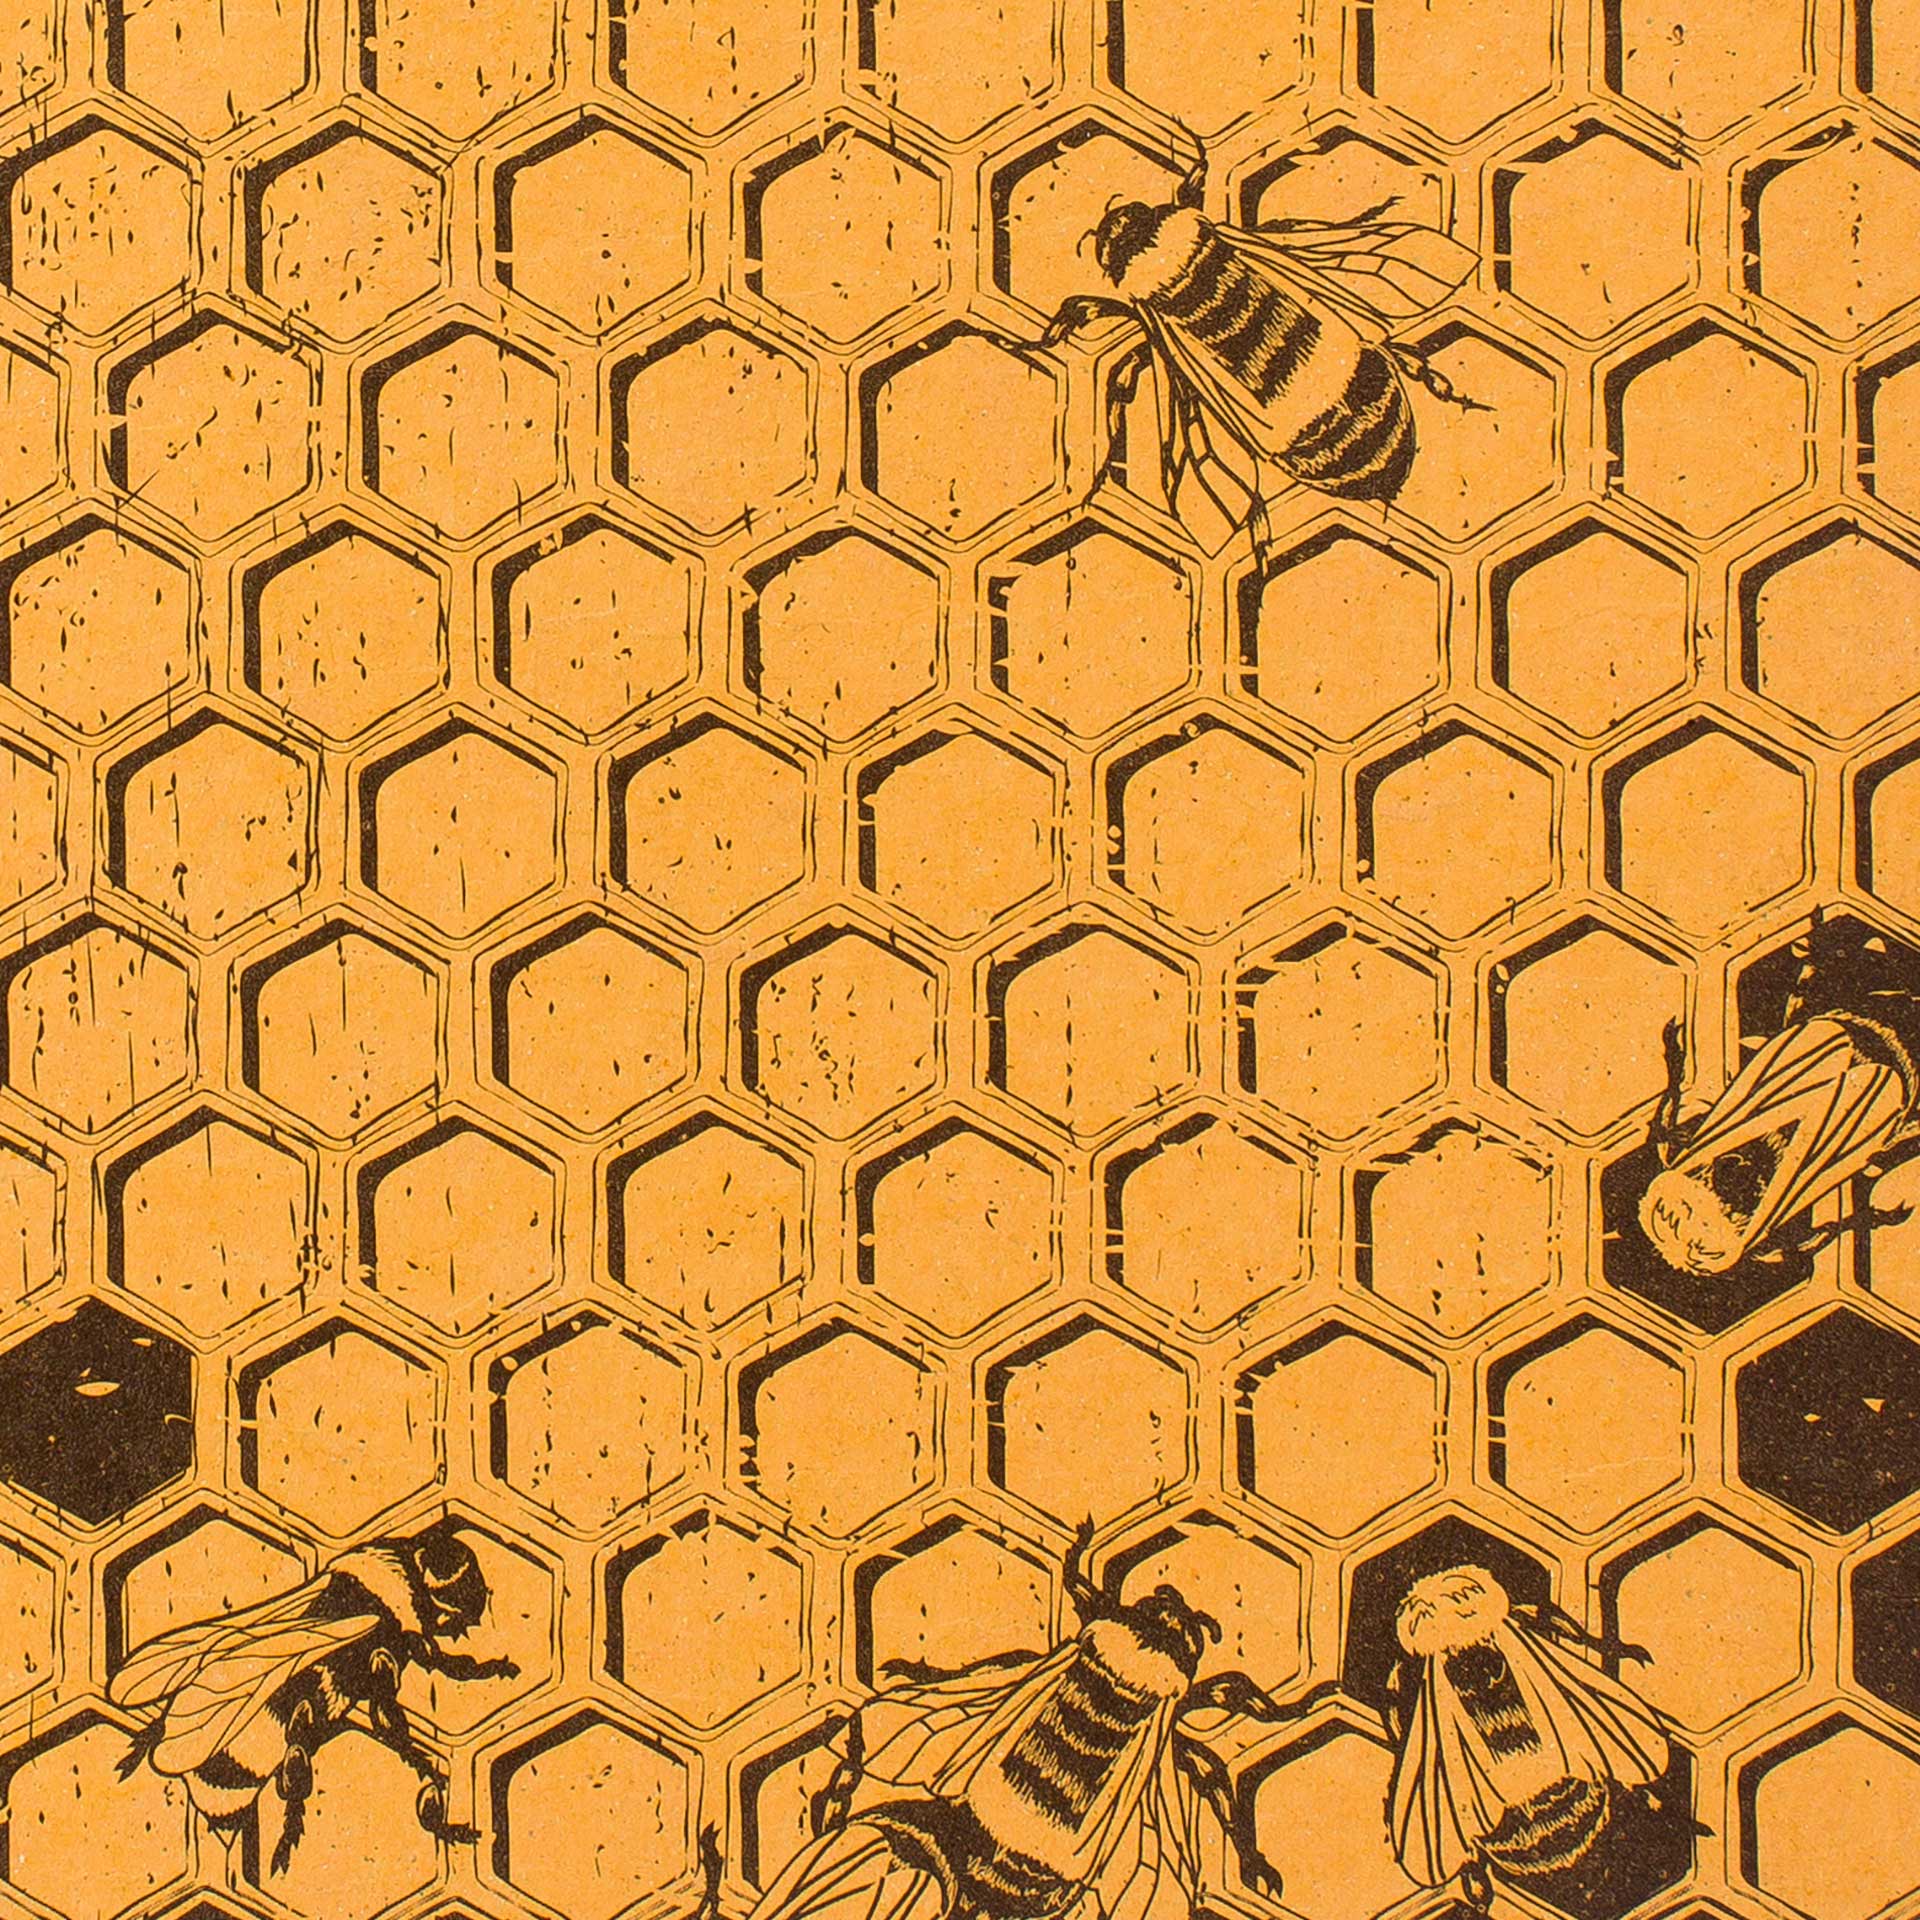 Closeup of printed honeycomb pattern and bees